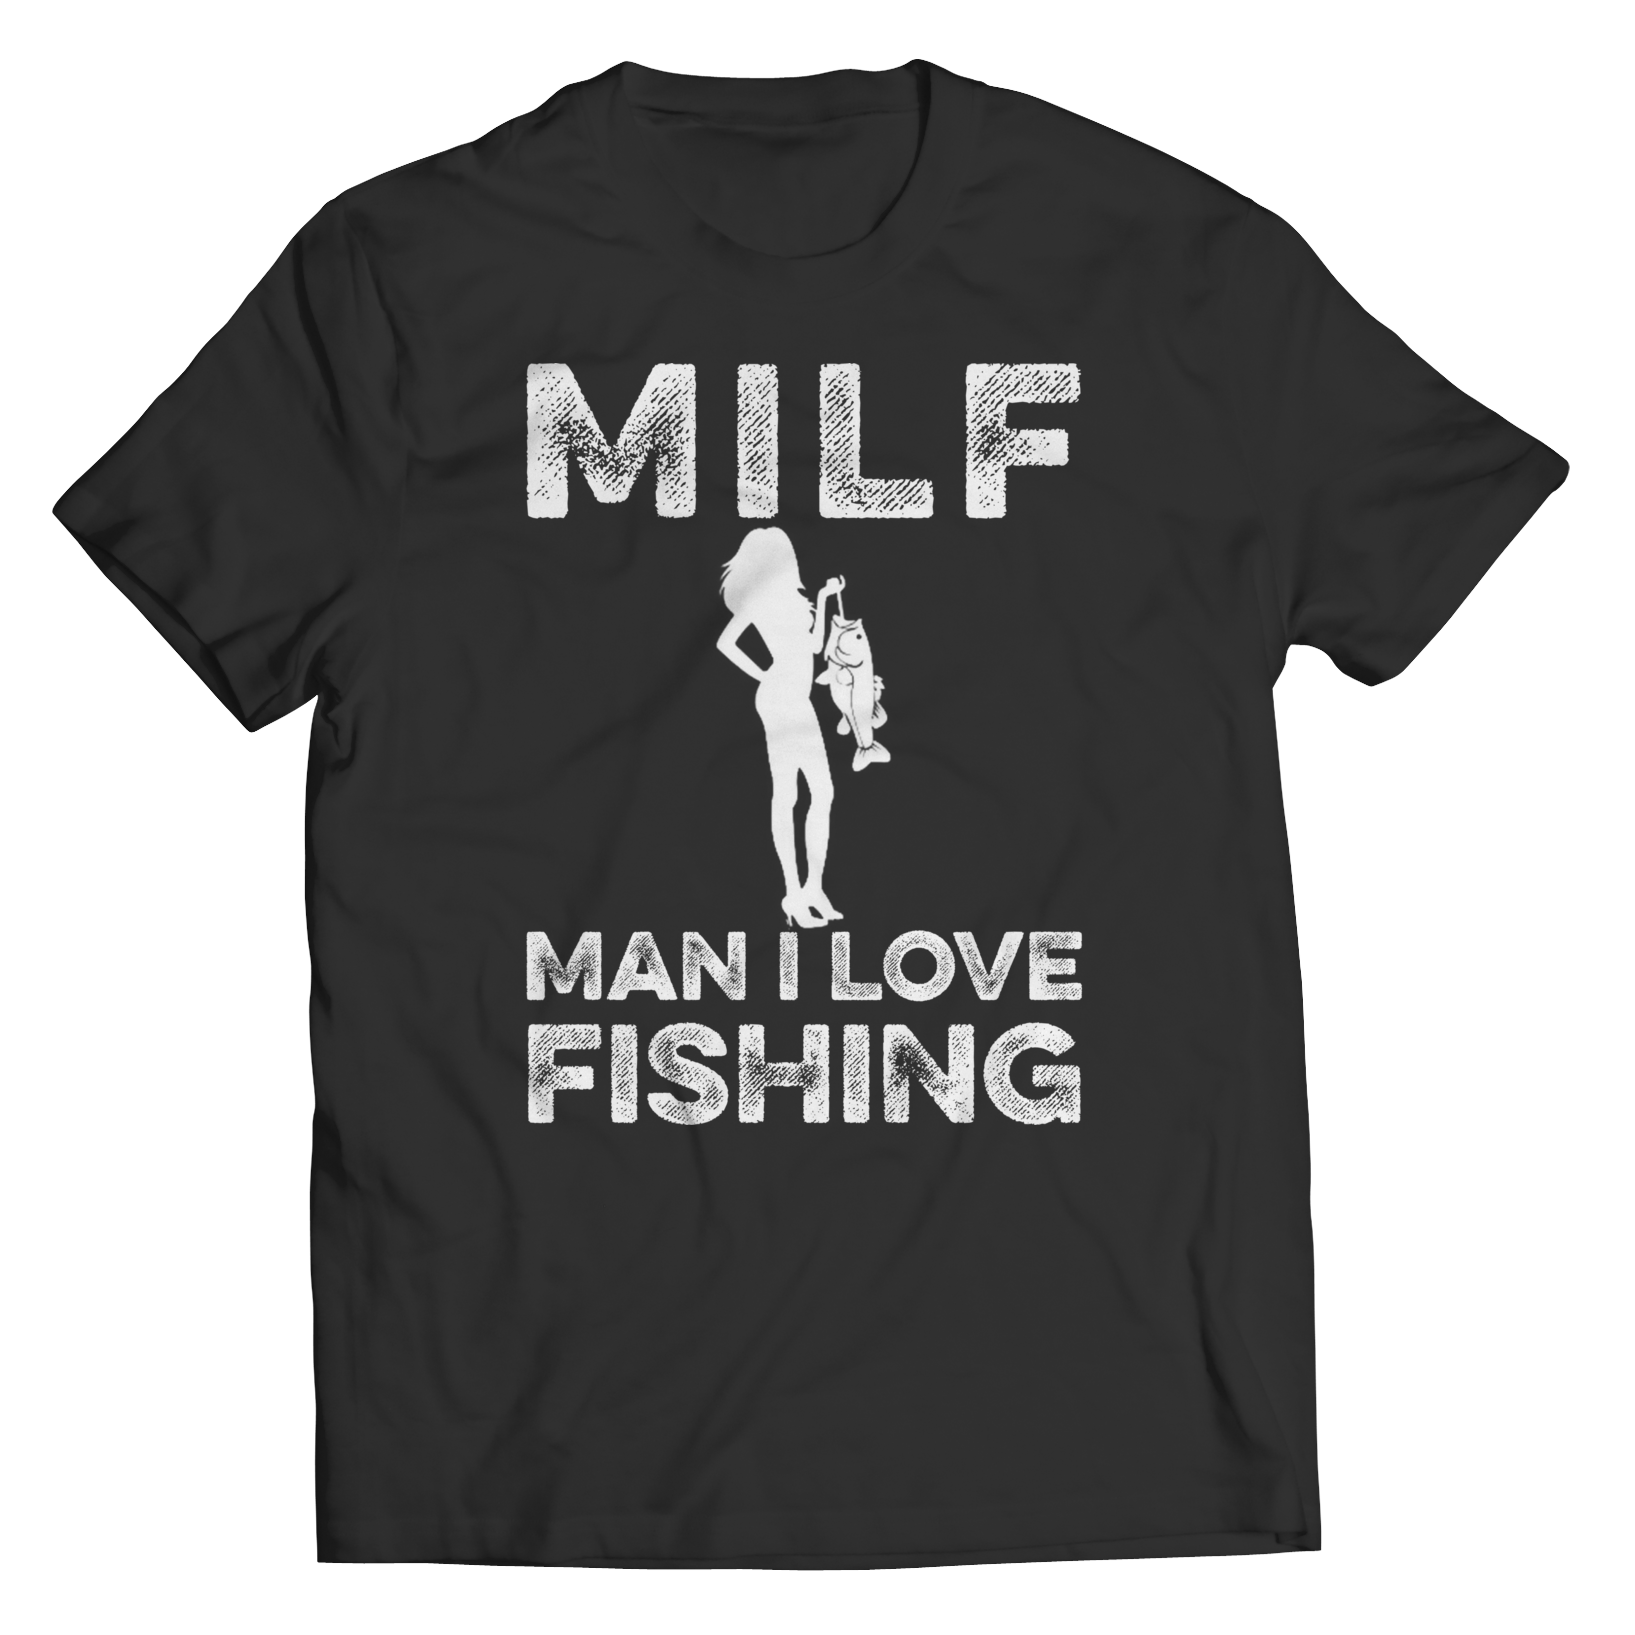 Limited Edition - MILF - Man I Love Fishing 3